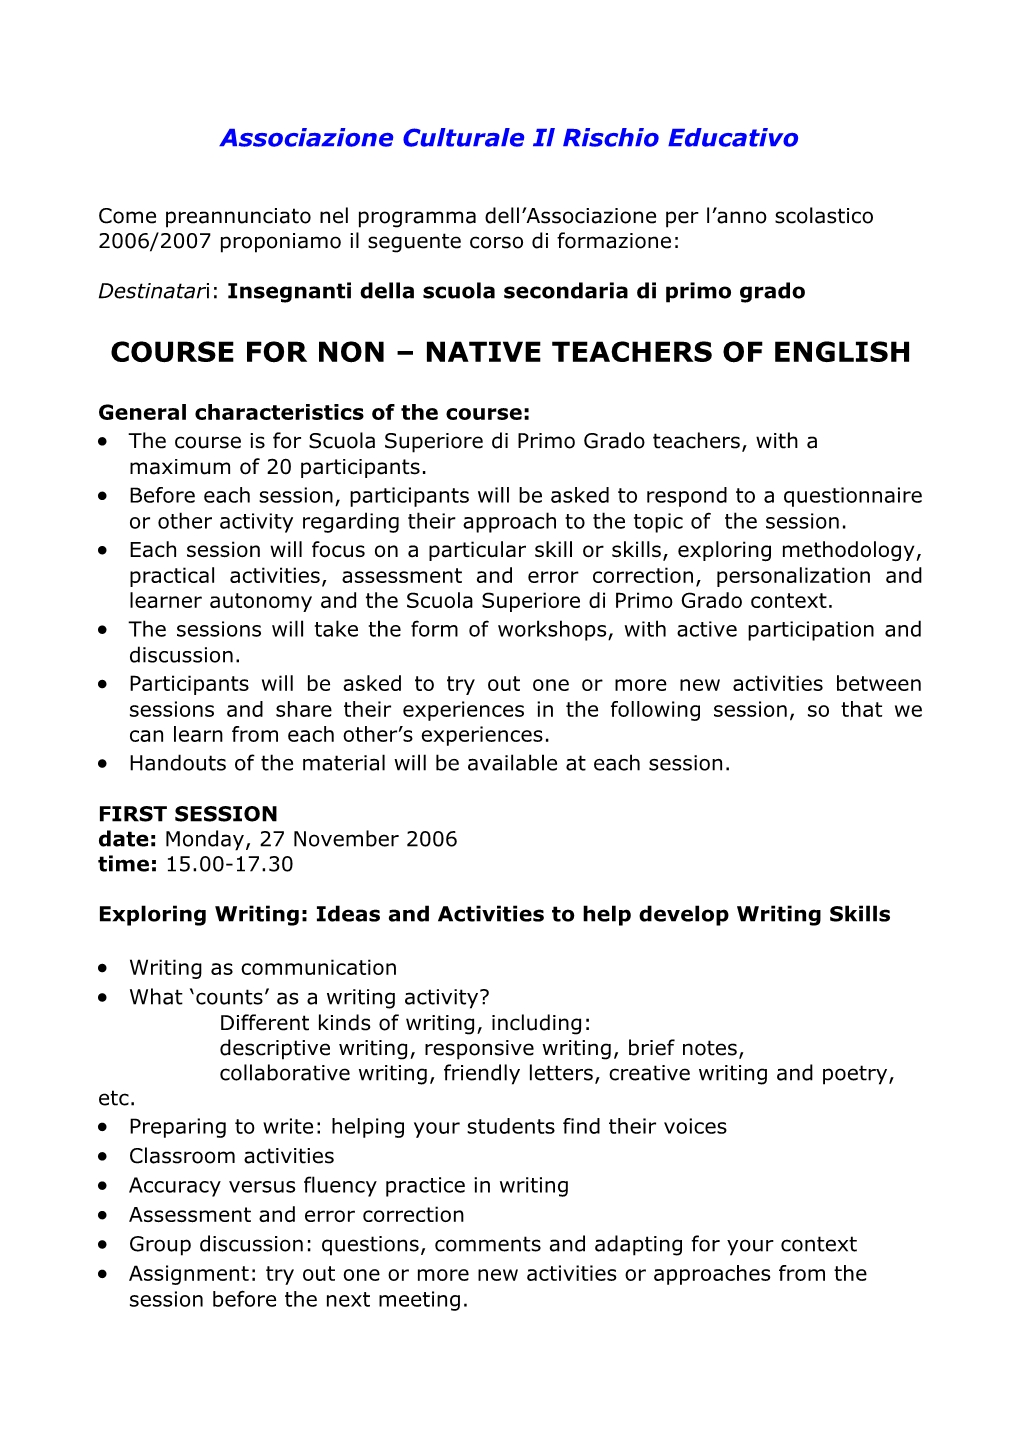 Course for Non Native Teachers of English